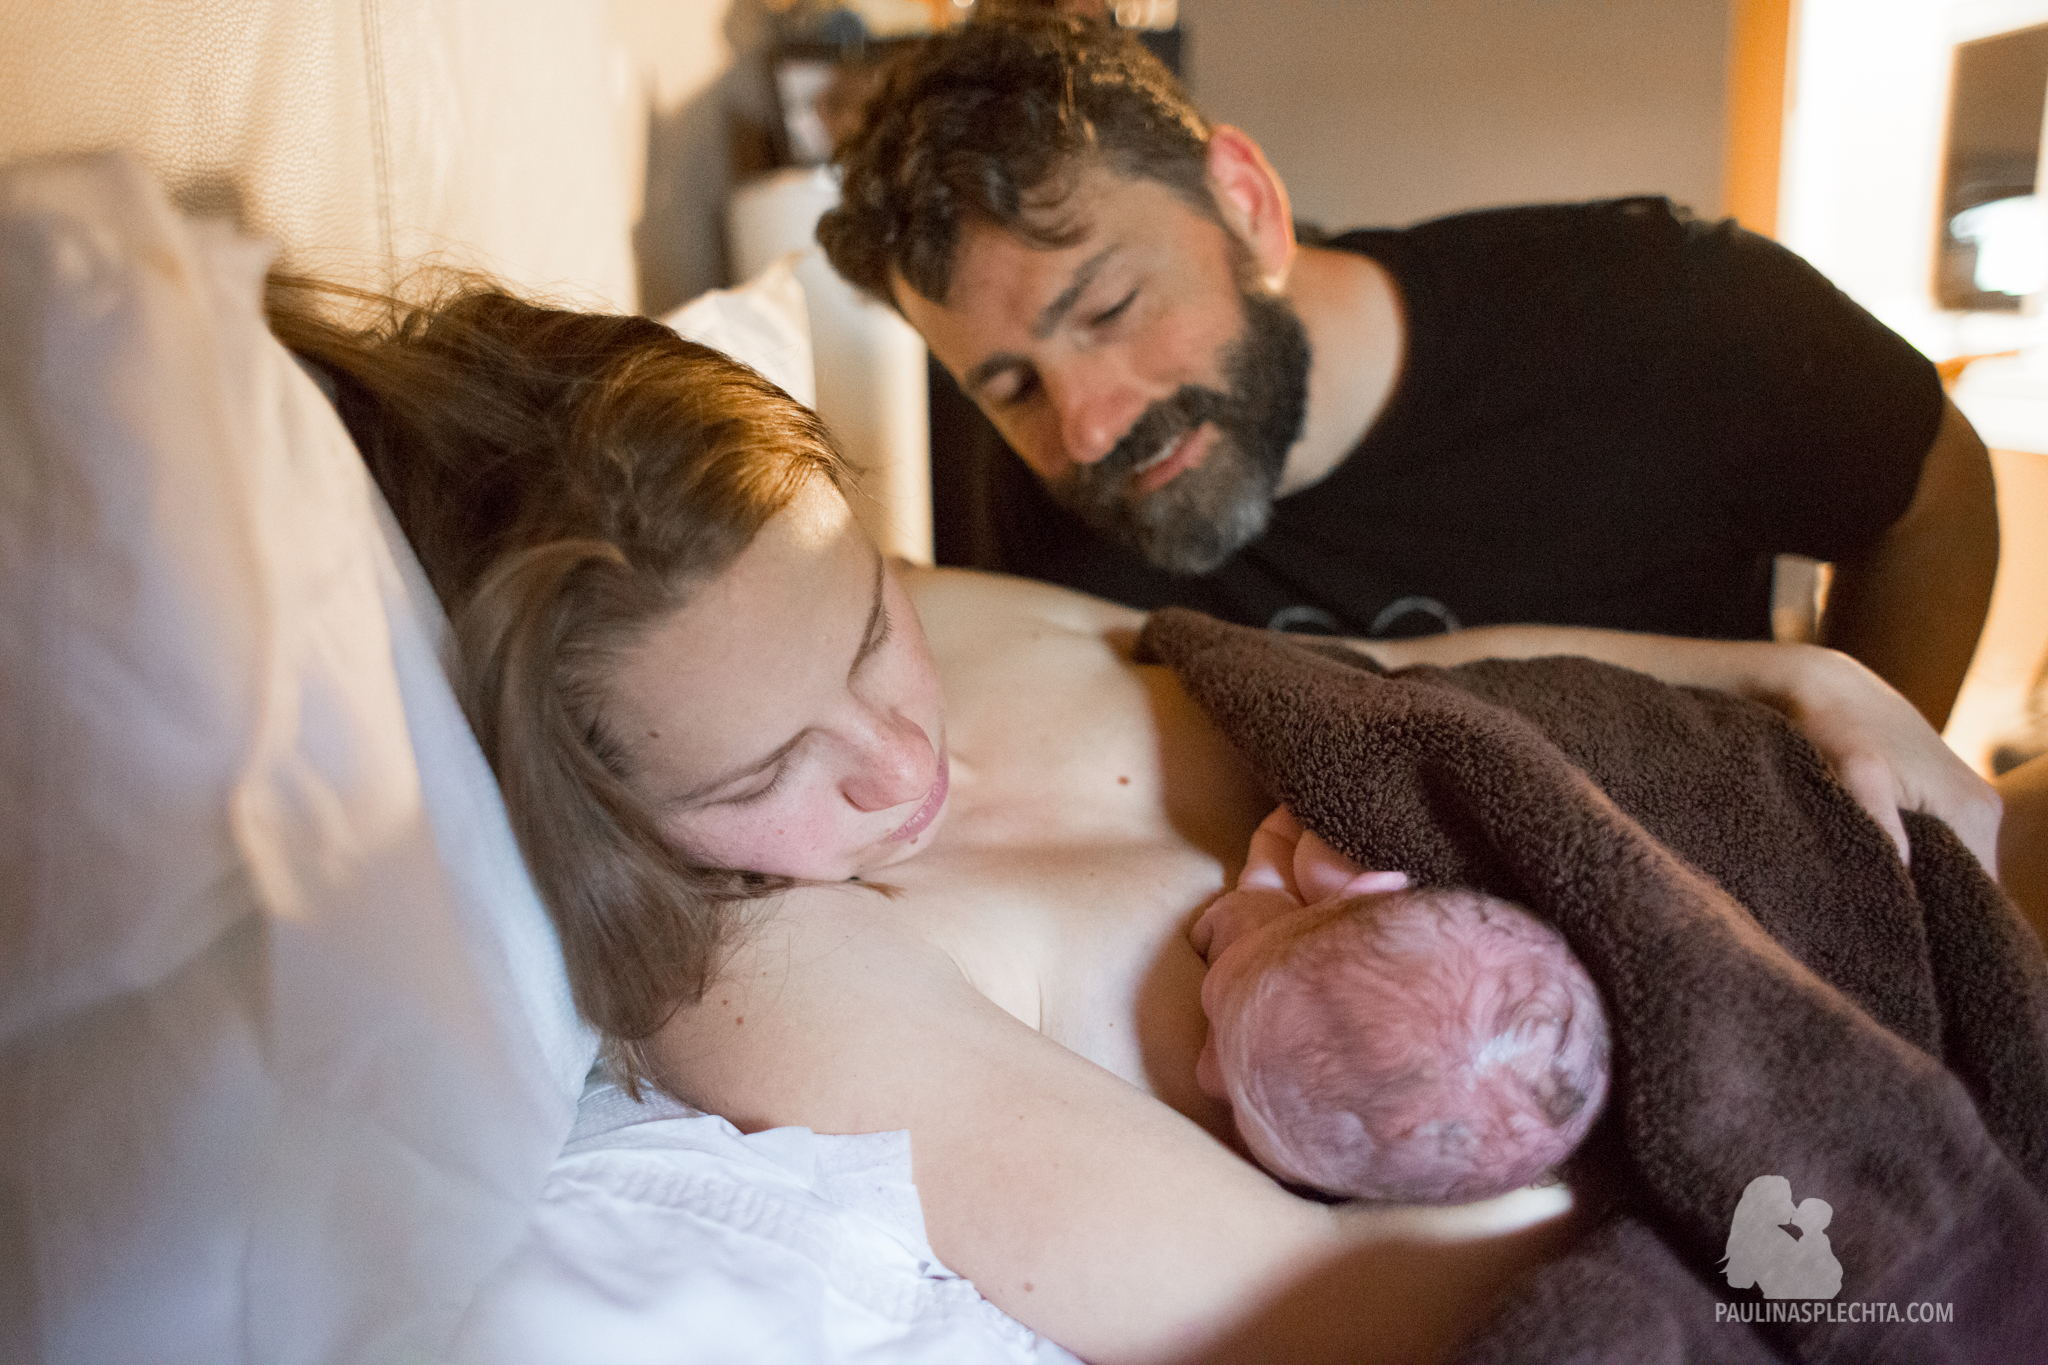 boyntonbeach-birthphotographer-maternityphotographer-newbornphotographer-midwife-doula-birthcenter-hospital-florida-83.jpg